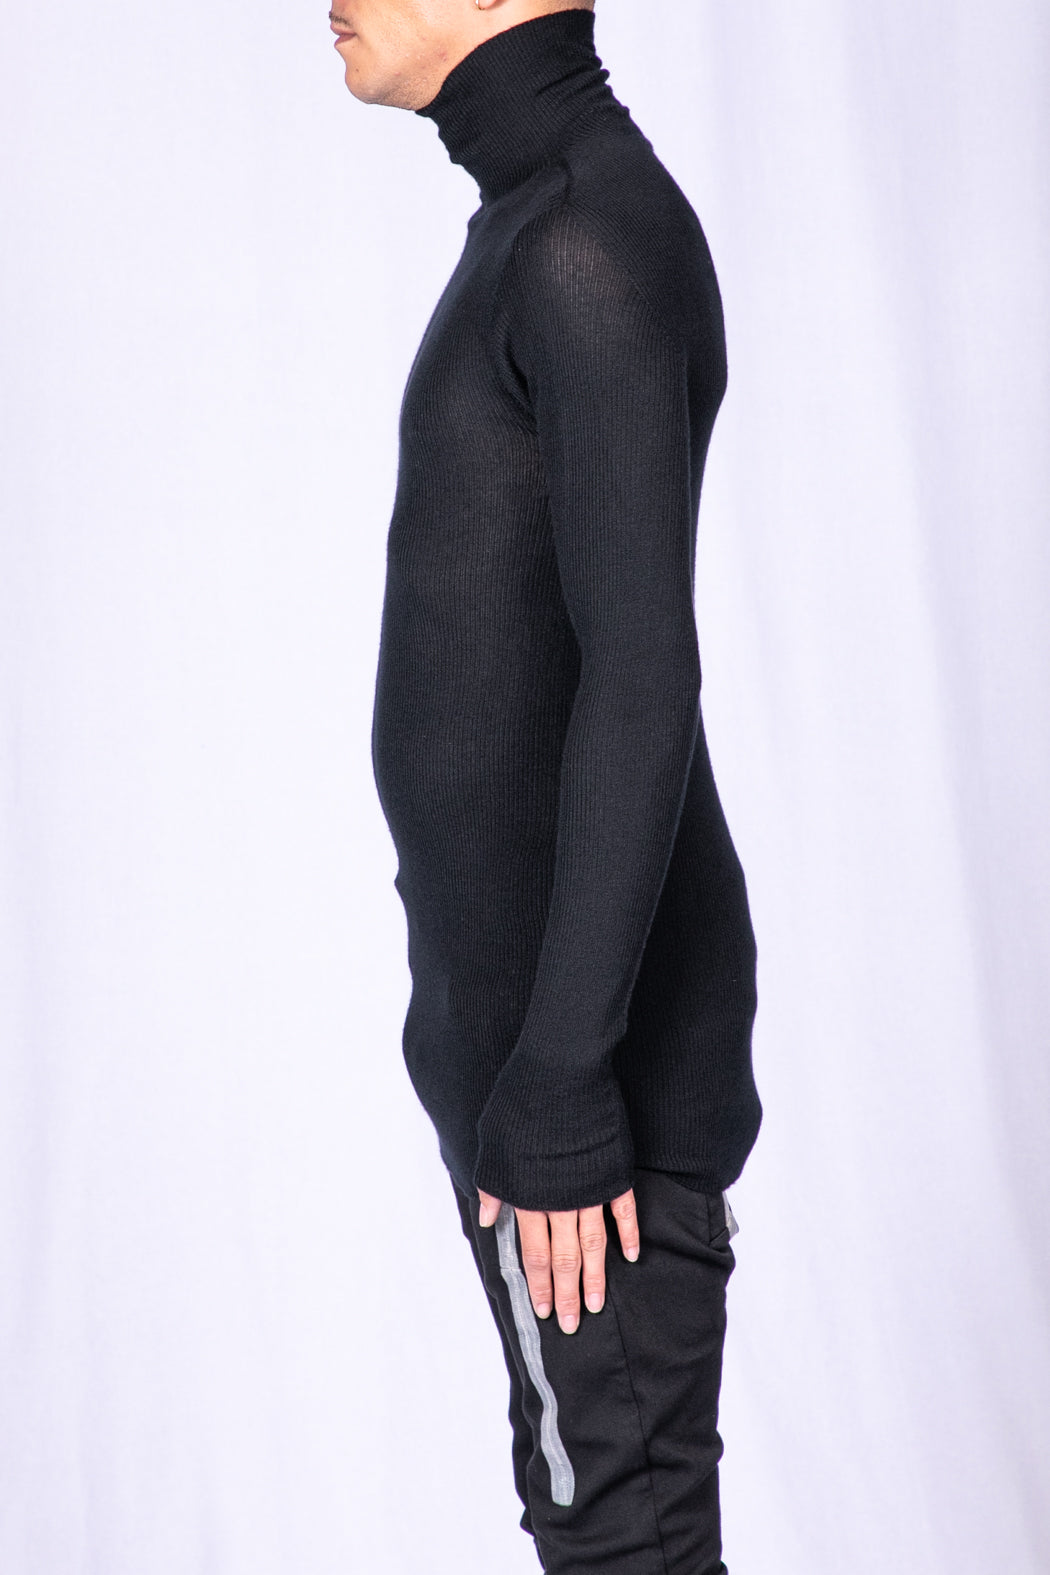 Black High Neck Seamless 3D Rib Knit Cashmere Sweater KNLS2